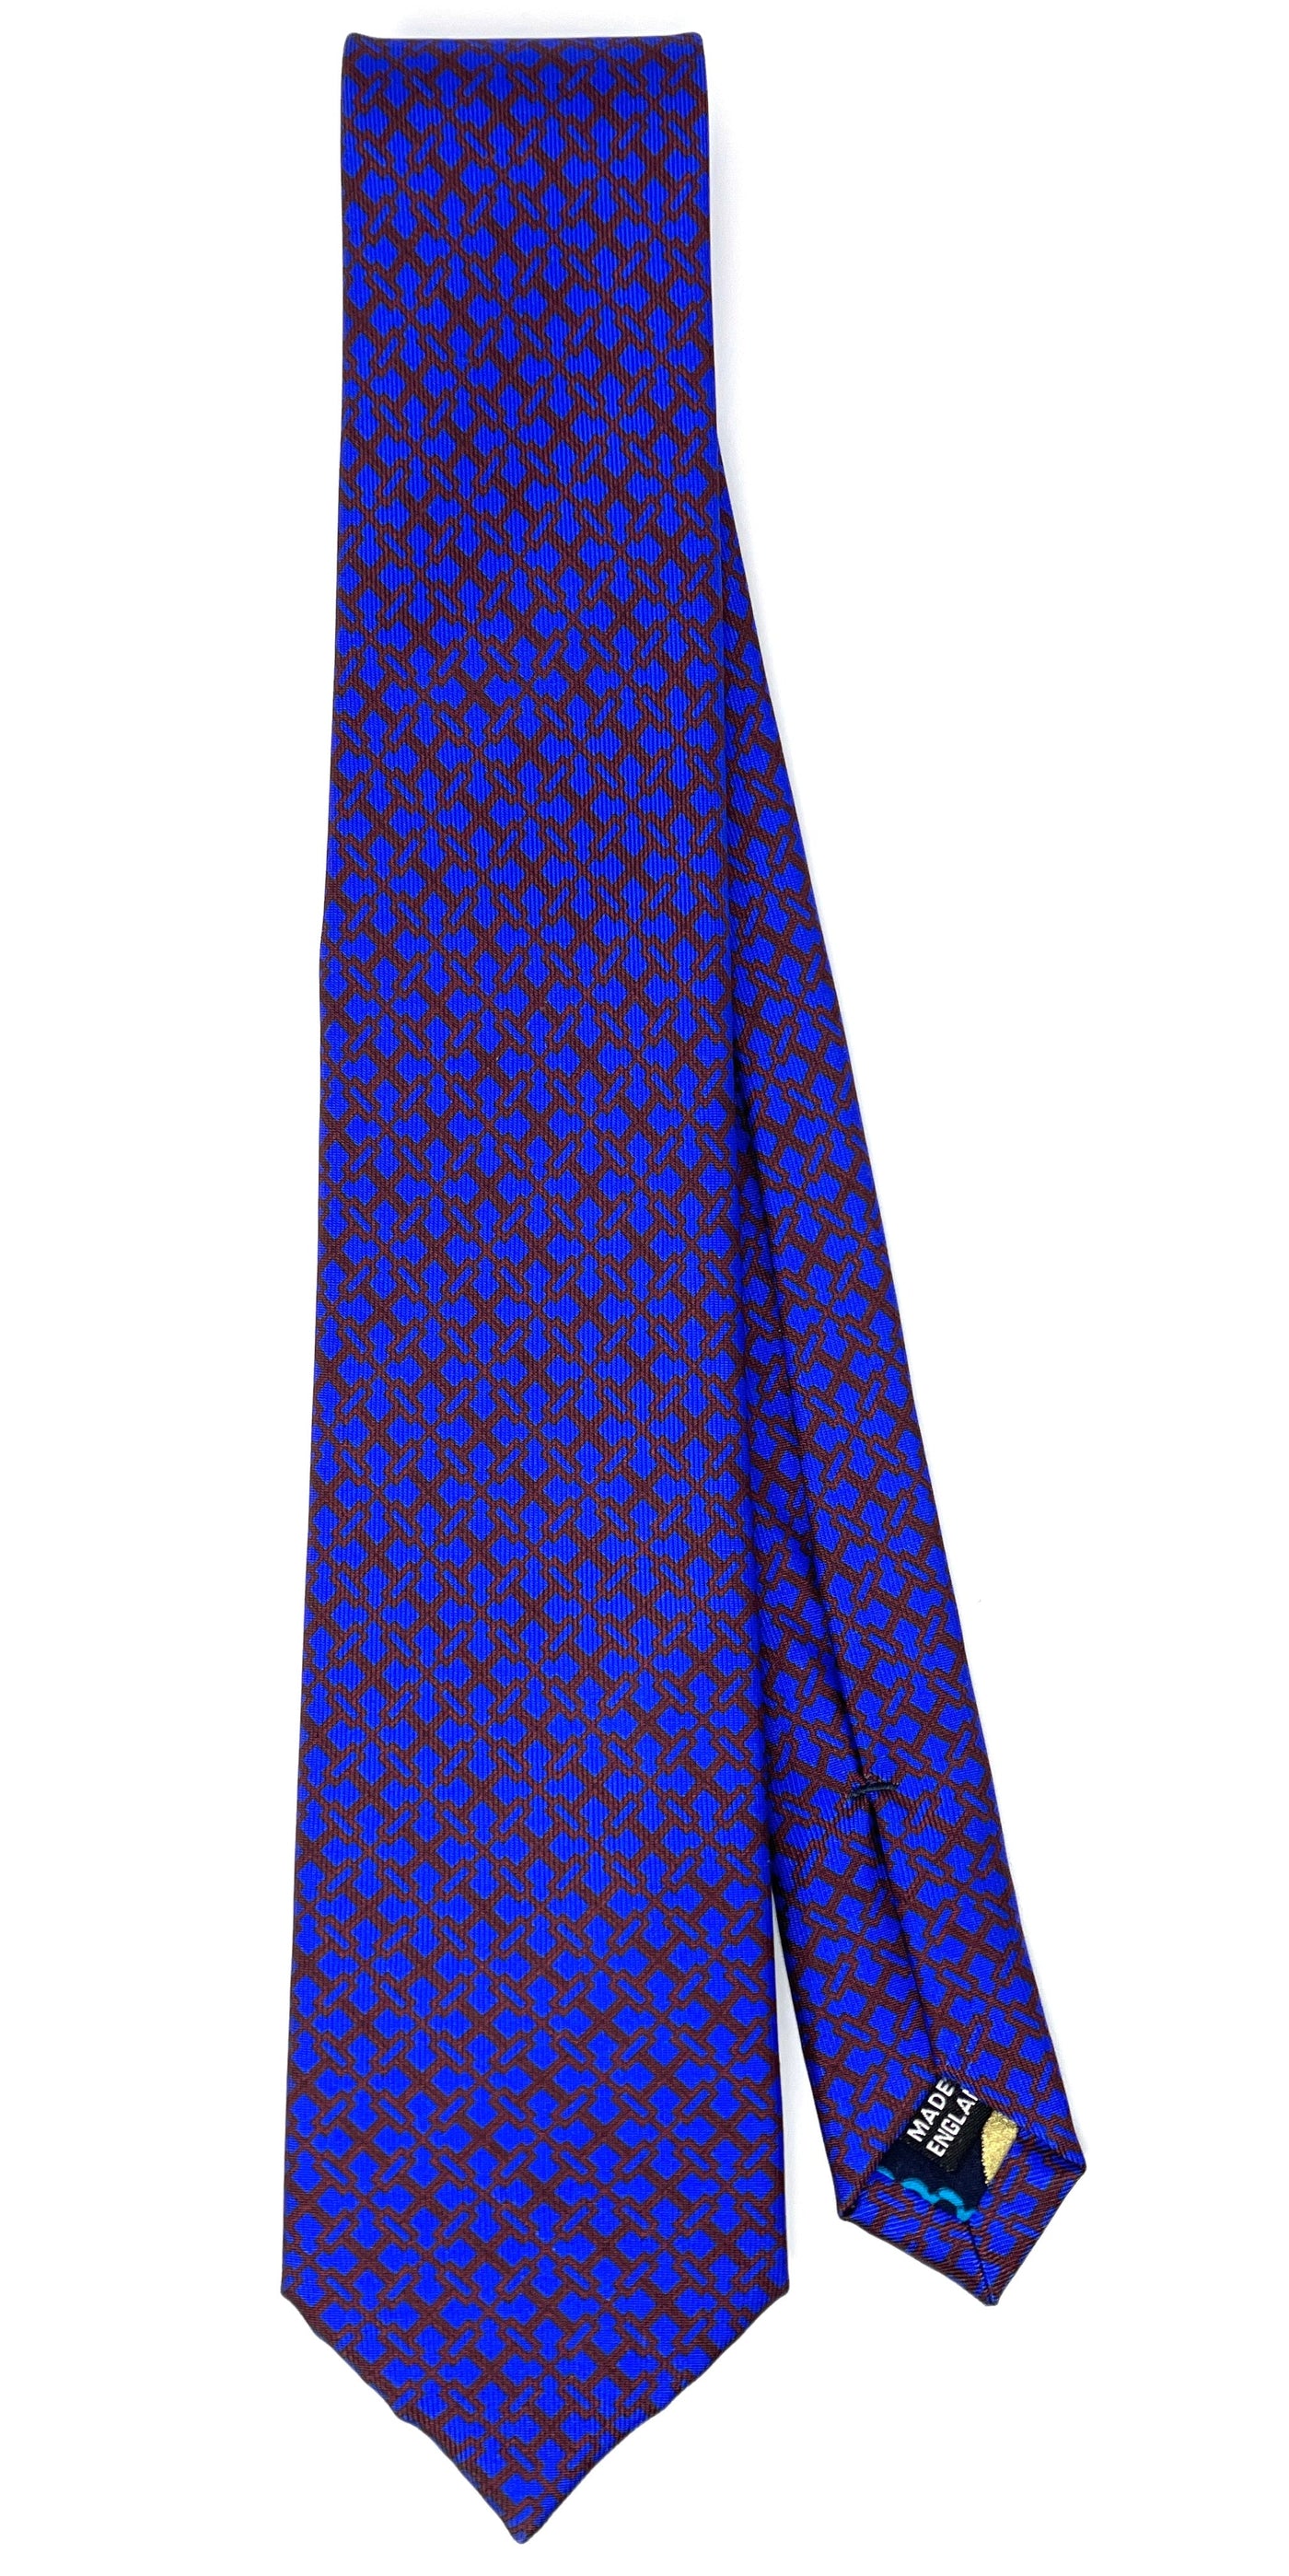 NSAA Wahala Edition hand-finished silk tie